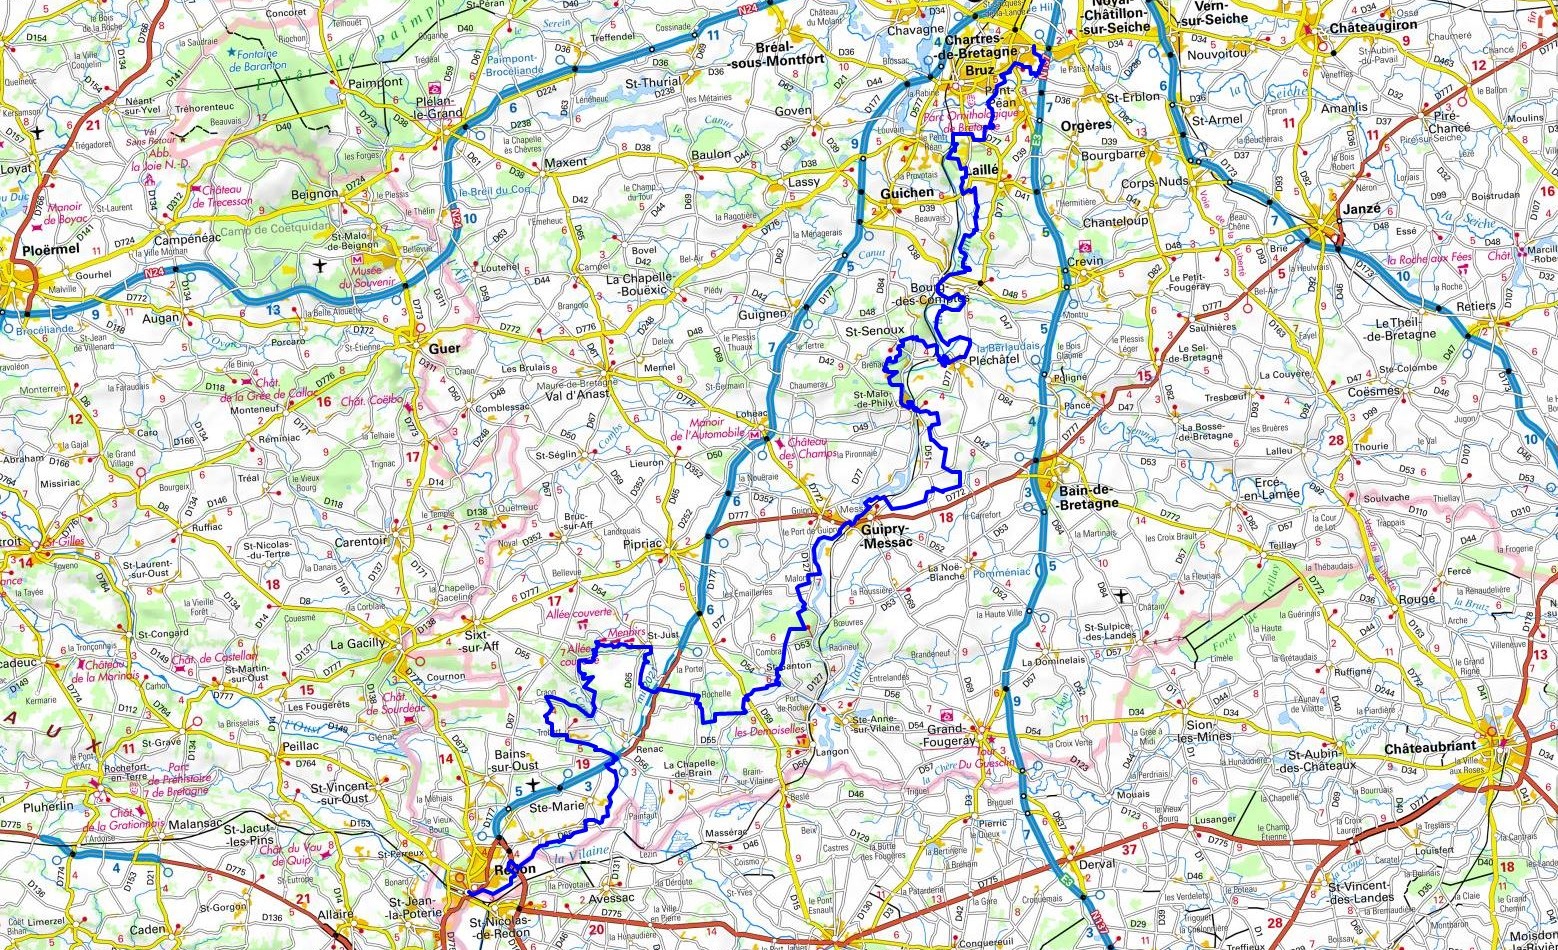 GR39 Hiking from Chartres-de-Bretagne to Redon (Ille-et-Vilaine) 1